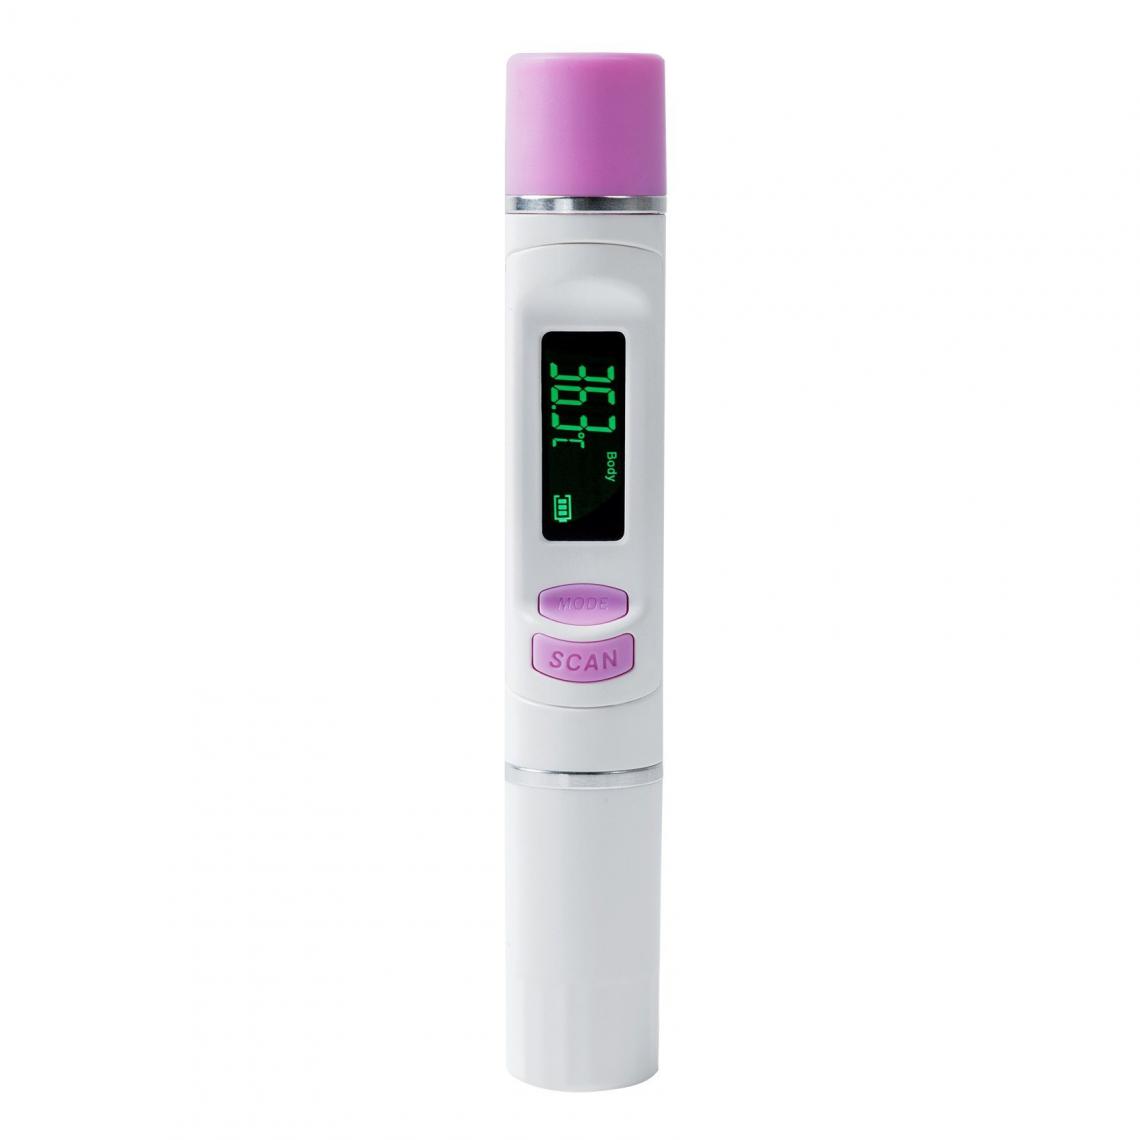 Justgreenbox - Mini thermomètre infrarouge portable sans contact 1S mesure rapide - 1005001934907647 - Thermomètre connecté